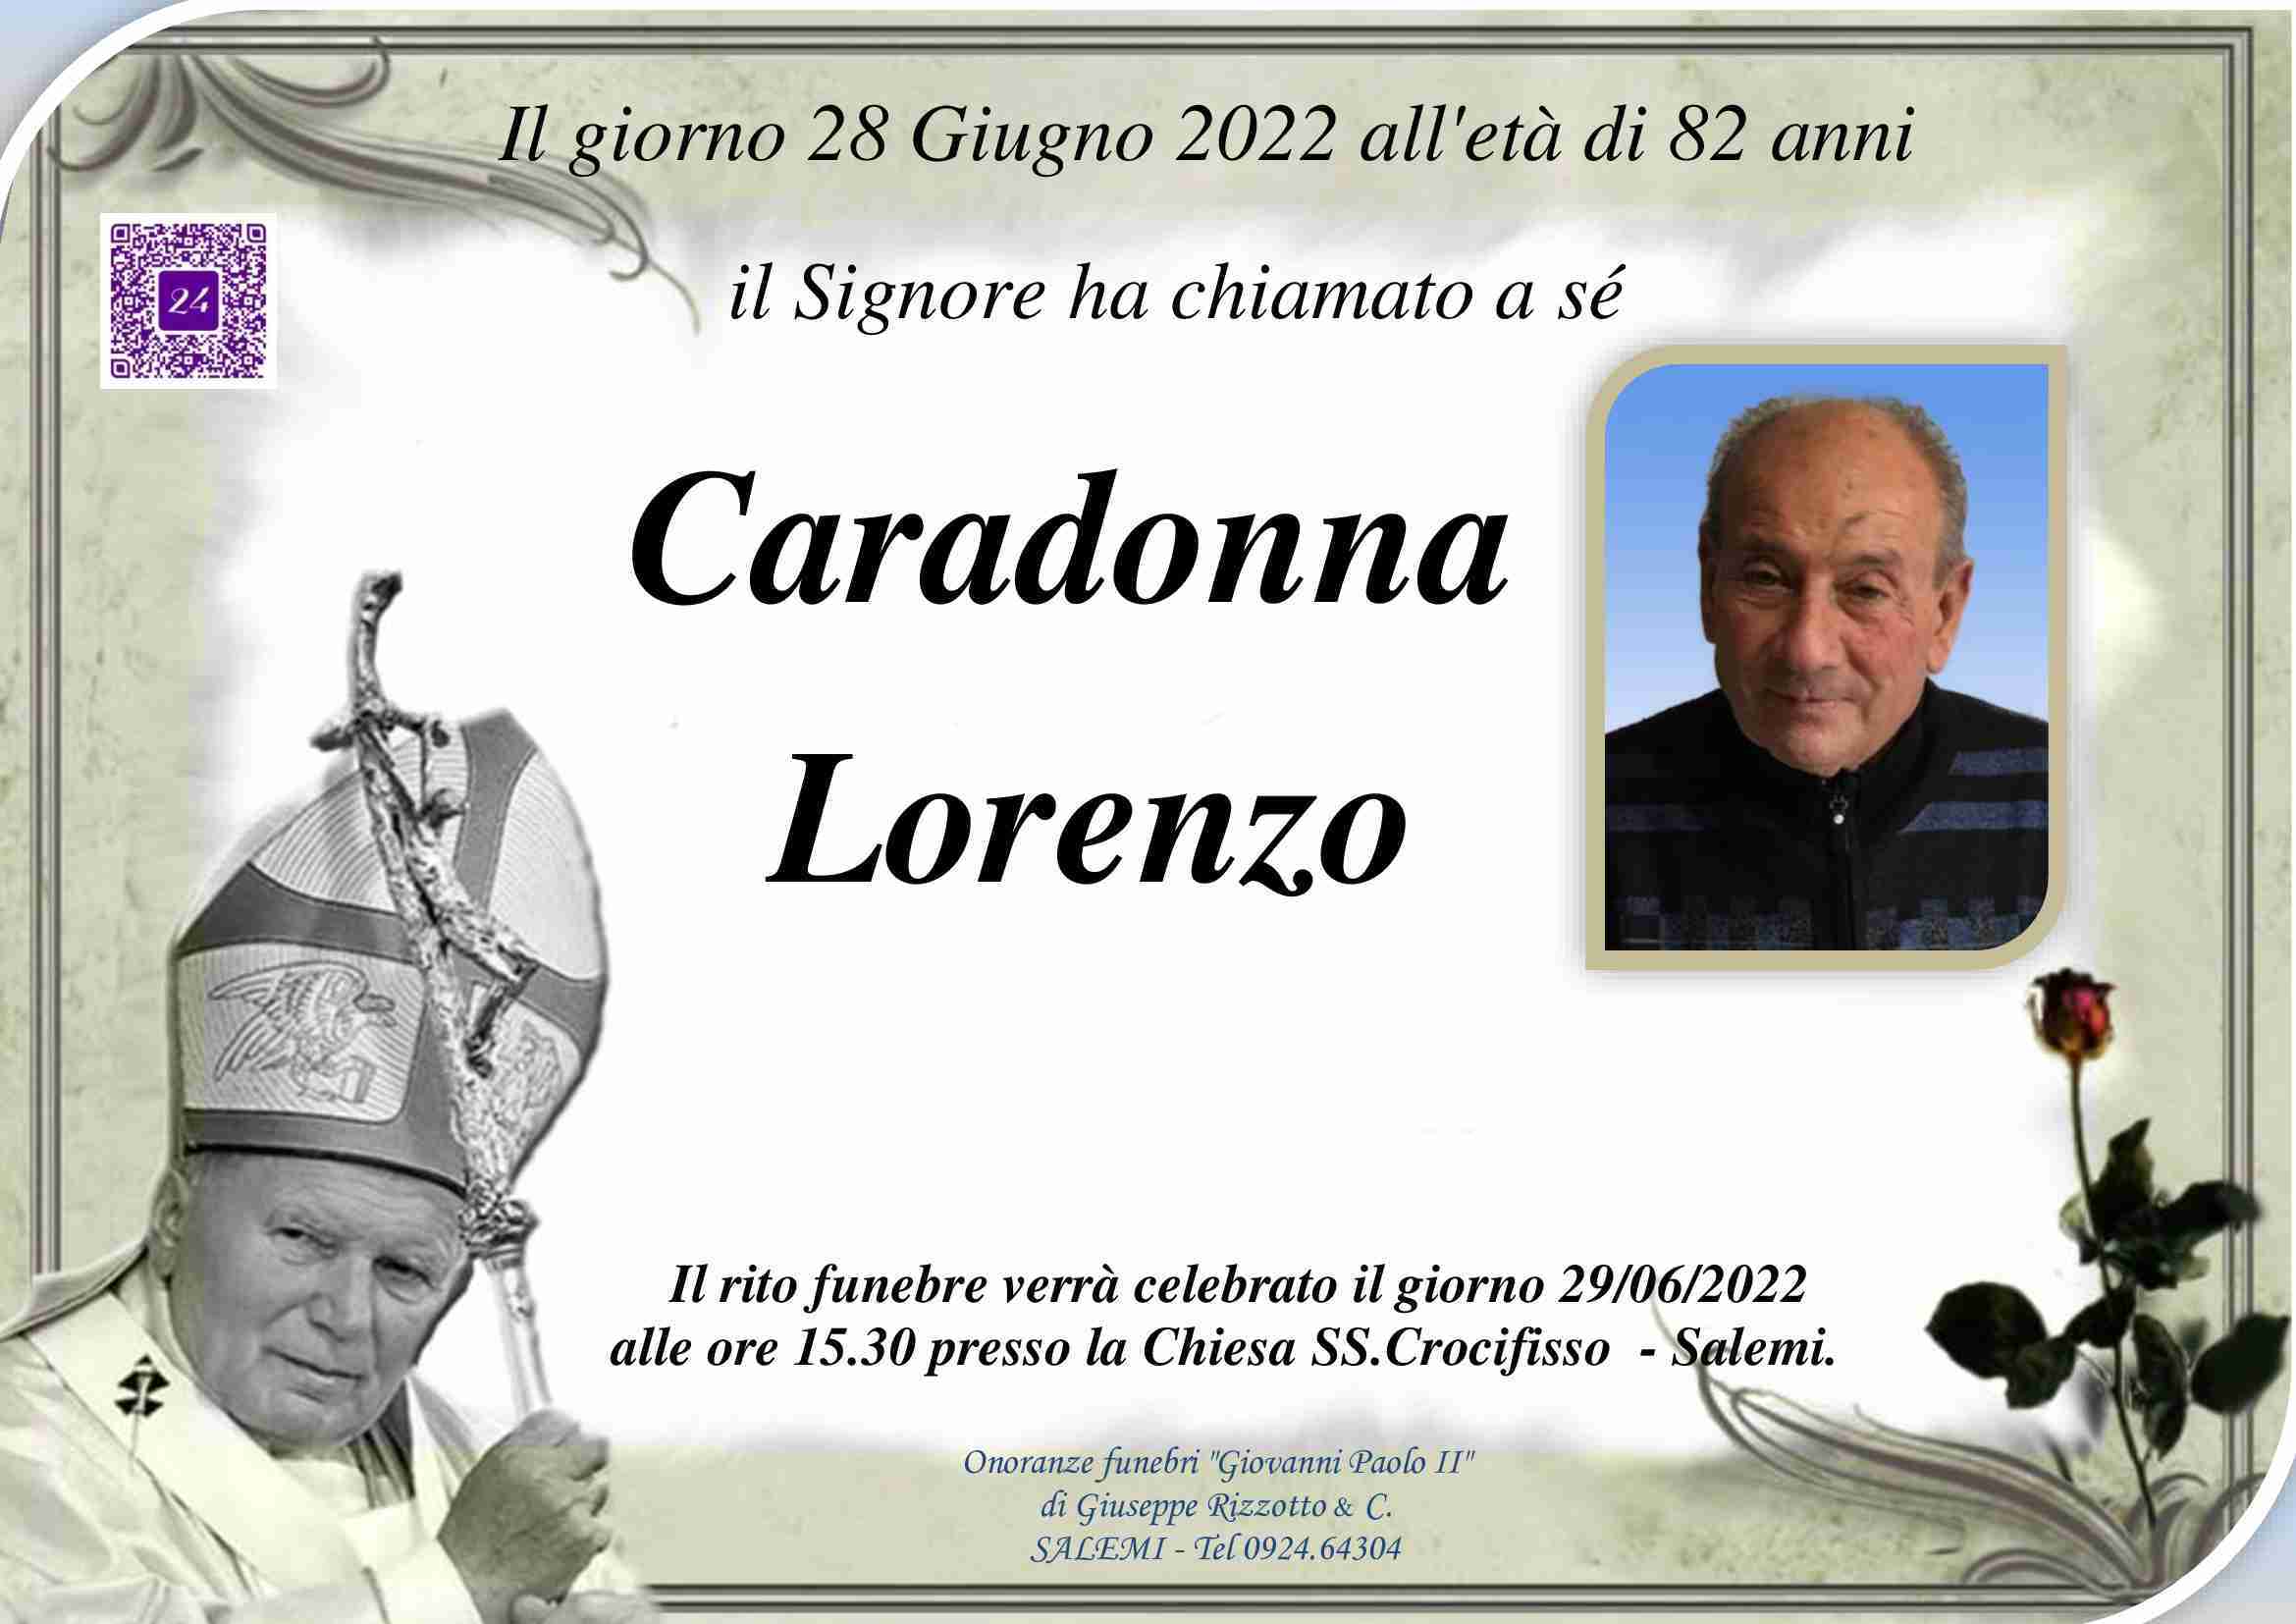 Lorenzo Caradonna